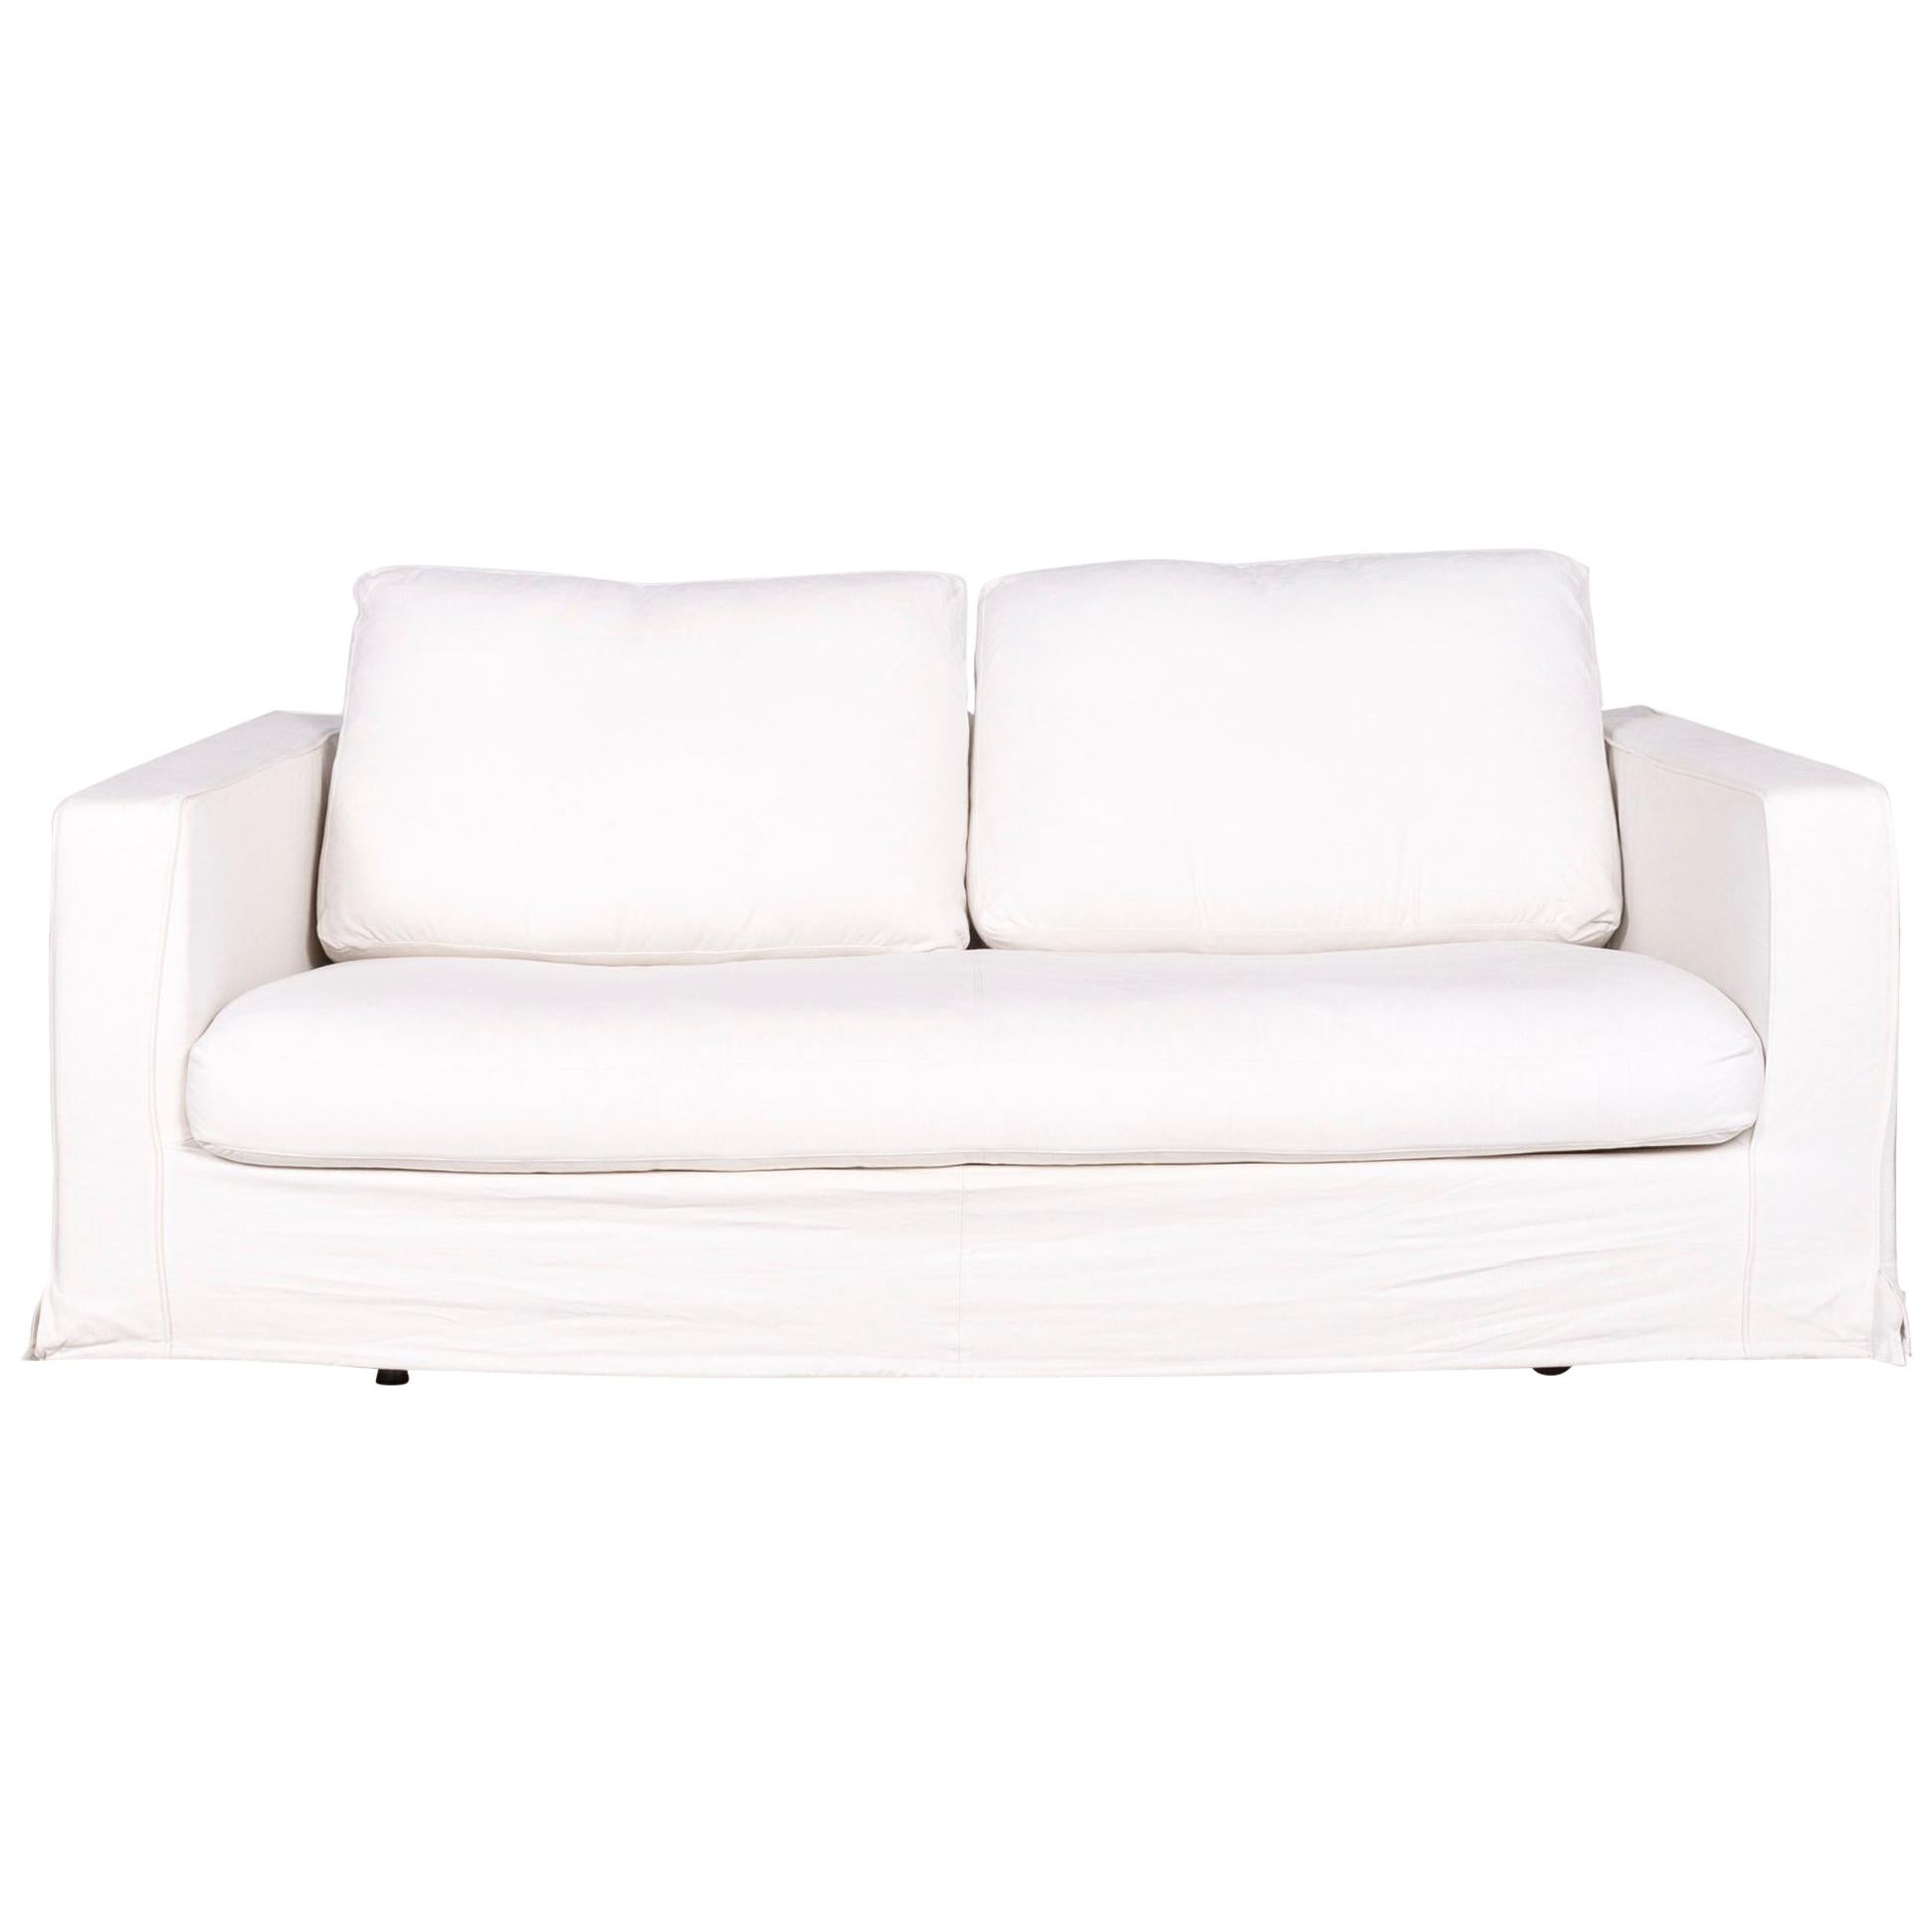 B & B Italia Baisity Designer Fabric Sofa White by Antonio Citterio Two-Seat For Sale